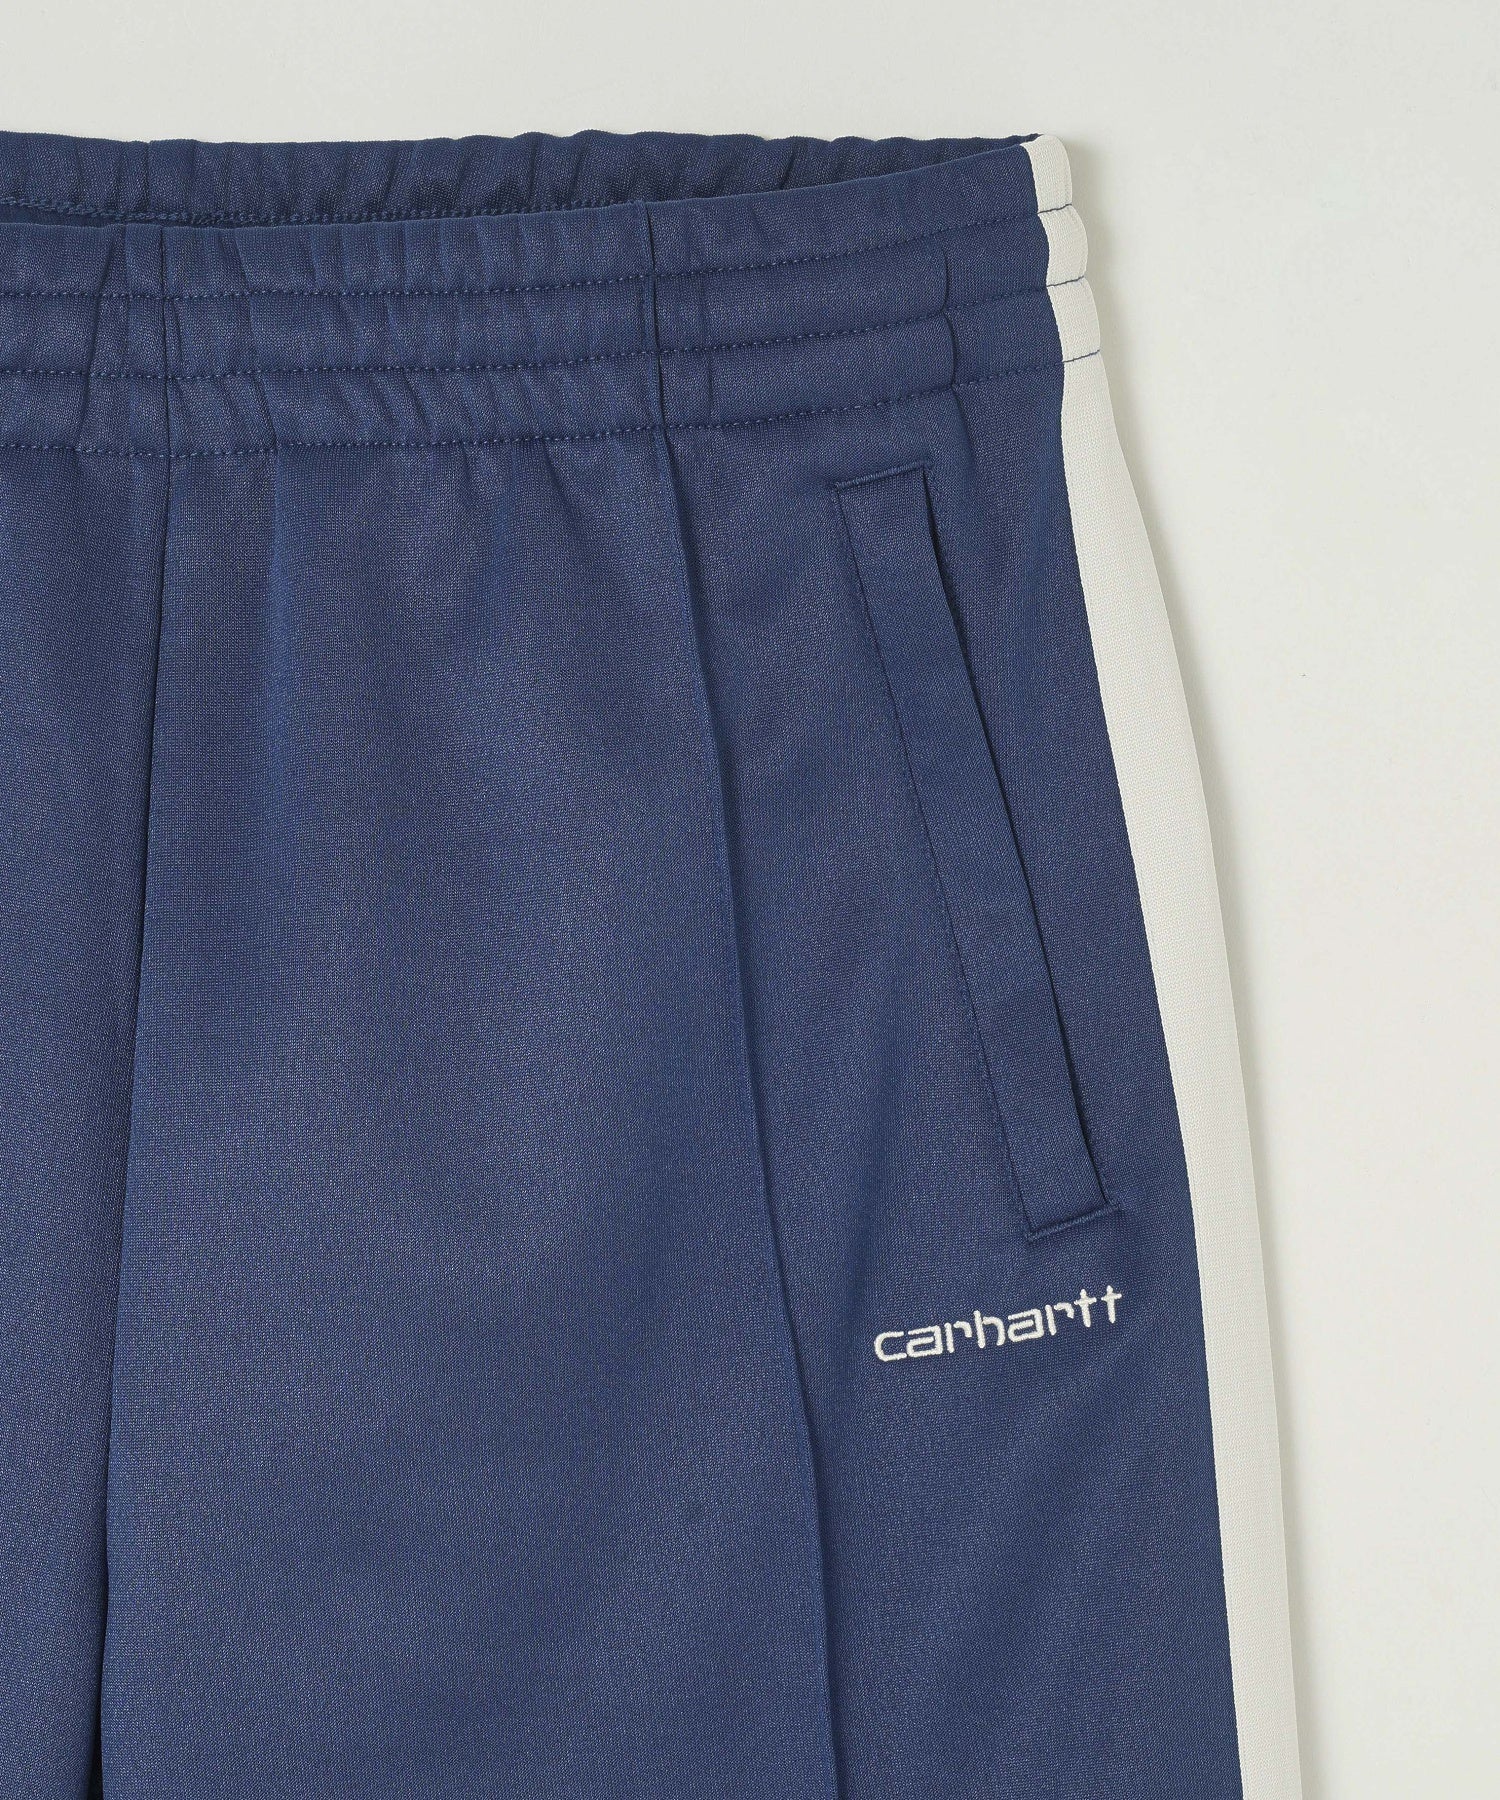 CARHARTT WIP/カーハート/BENCHILL SWEAT PANT/I033089